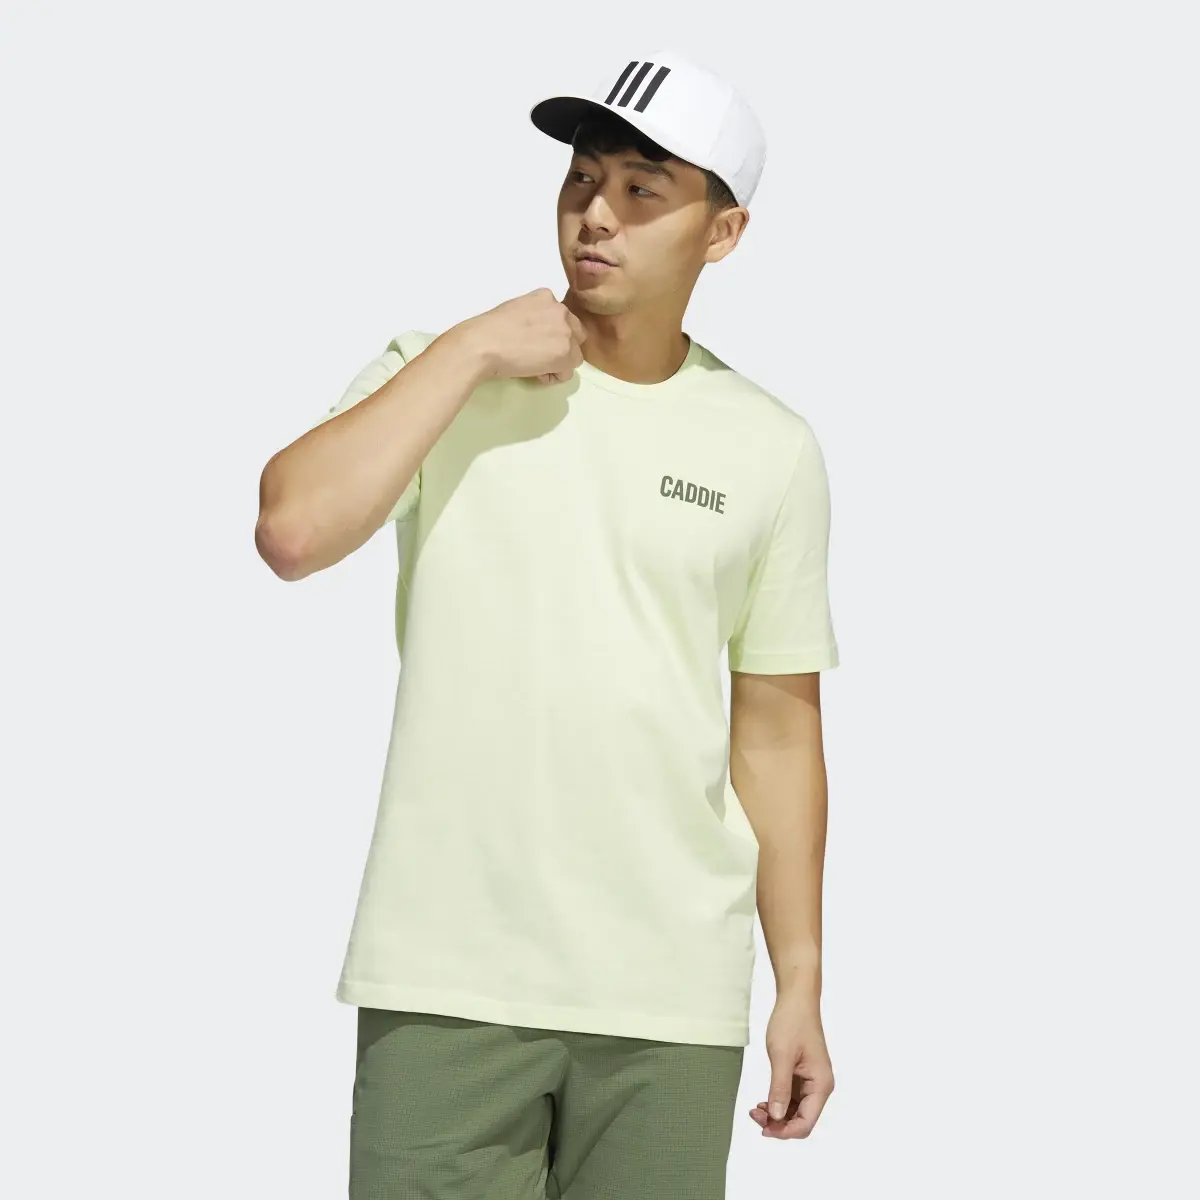 Adidas Adicross Caddie Golf T-Shirt. 2